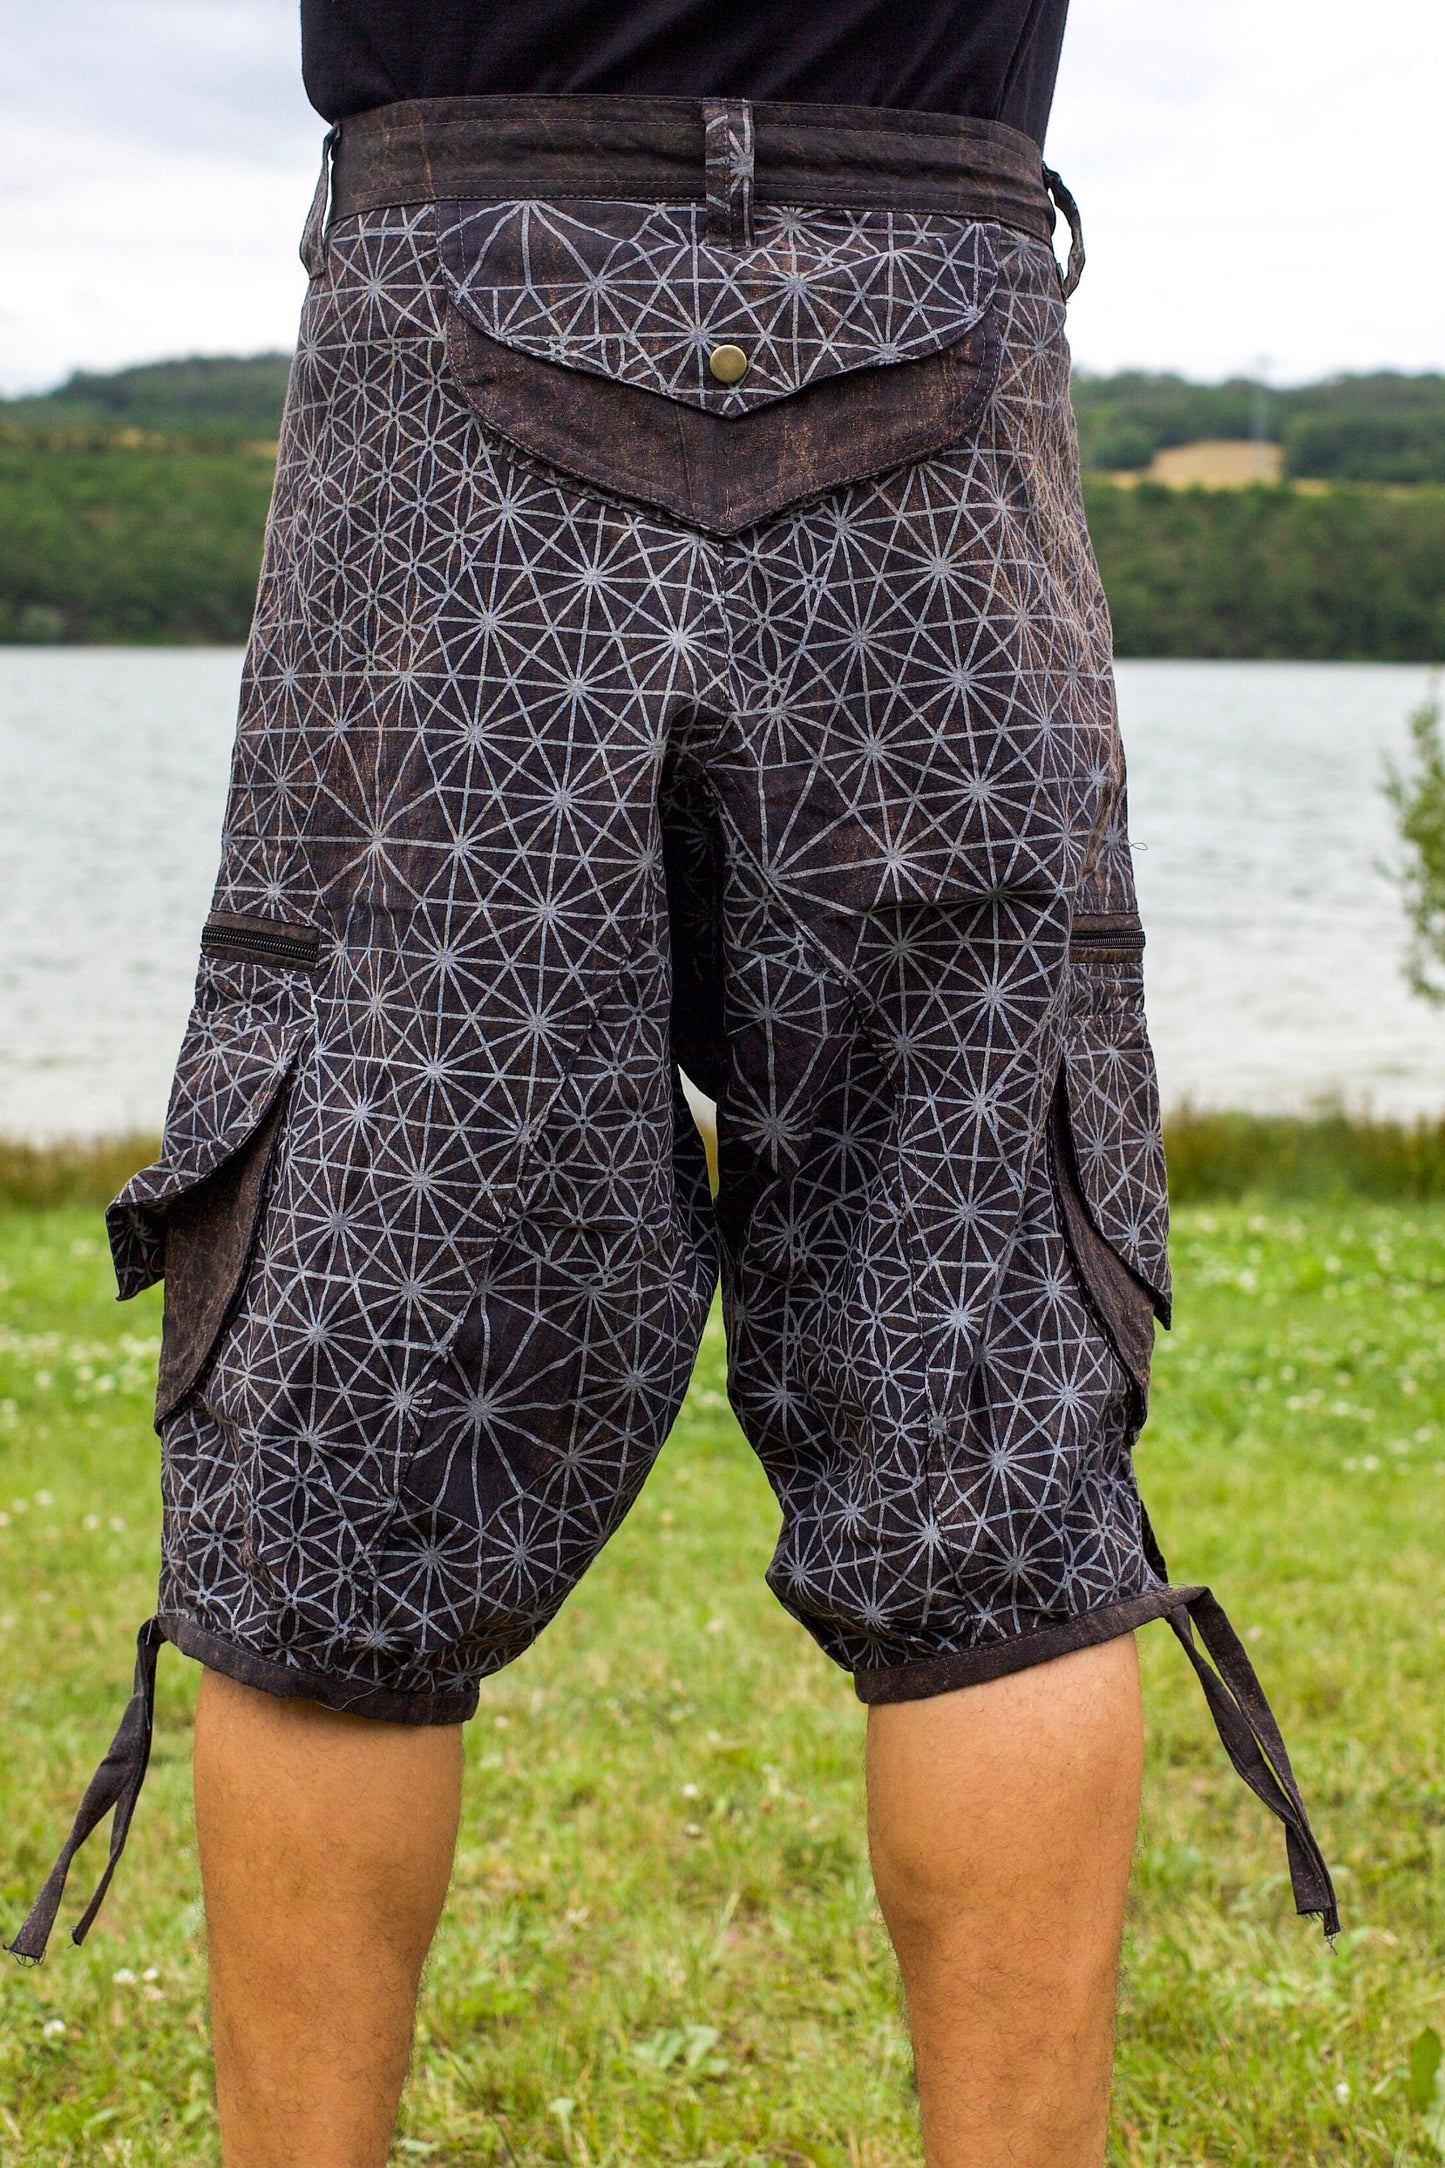 Asanoha Pants - 2 in 1 shorts and long pants - 9 pockets handmade sacred psychedelic cannabis japonese hemp geometry comfortable clamdiggers